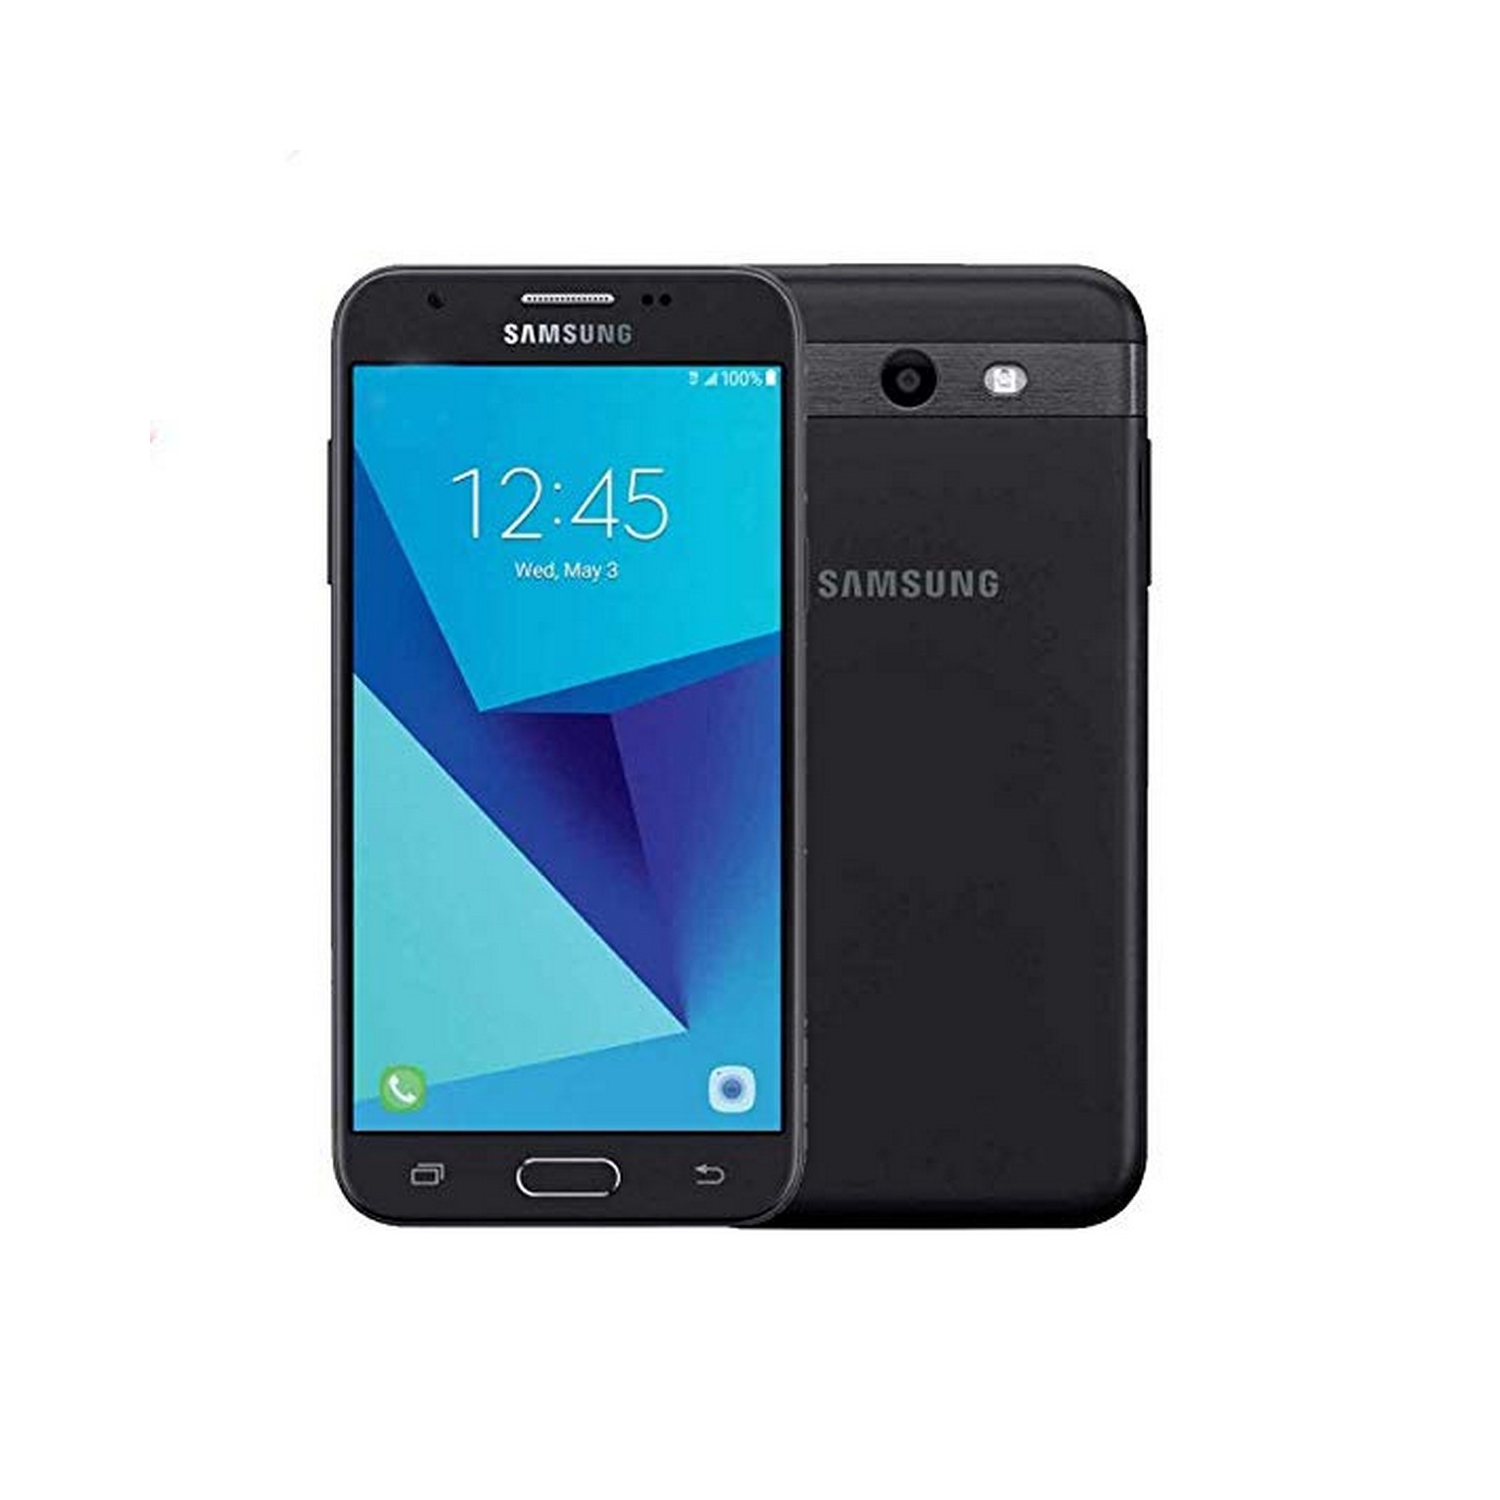 Refurbished (Good) - Samsung Galaxy J3 (2017) Black 16 GB